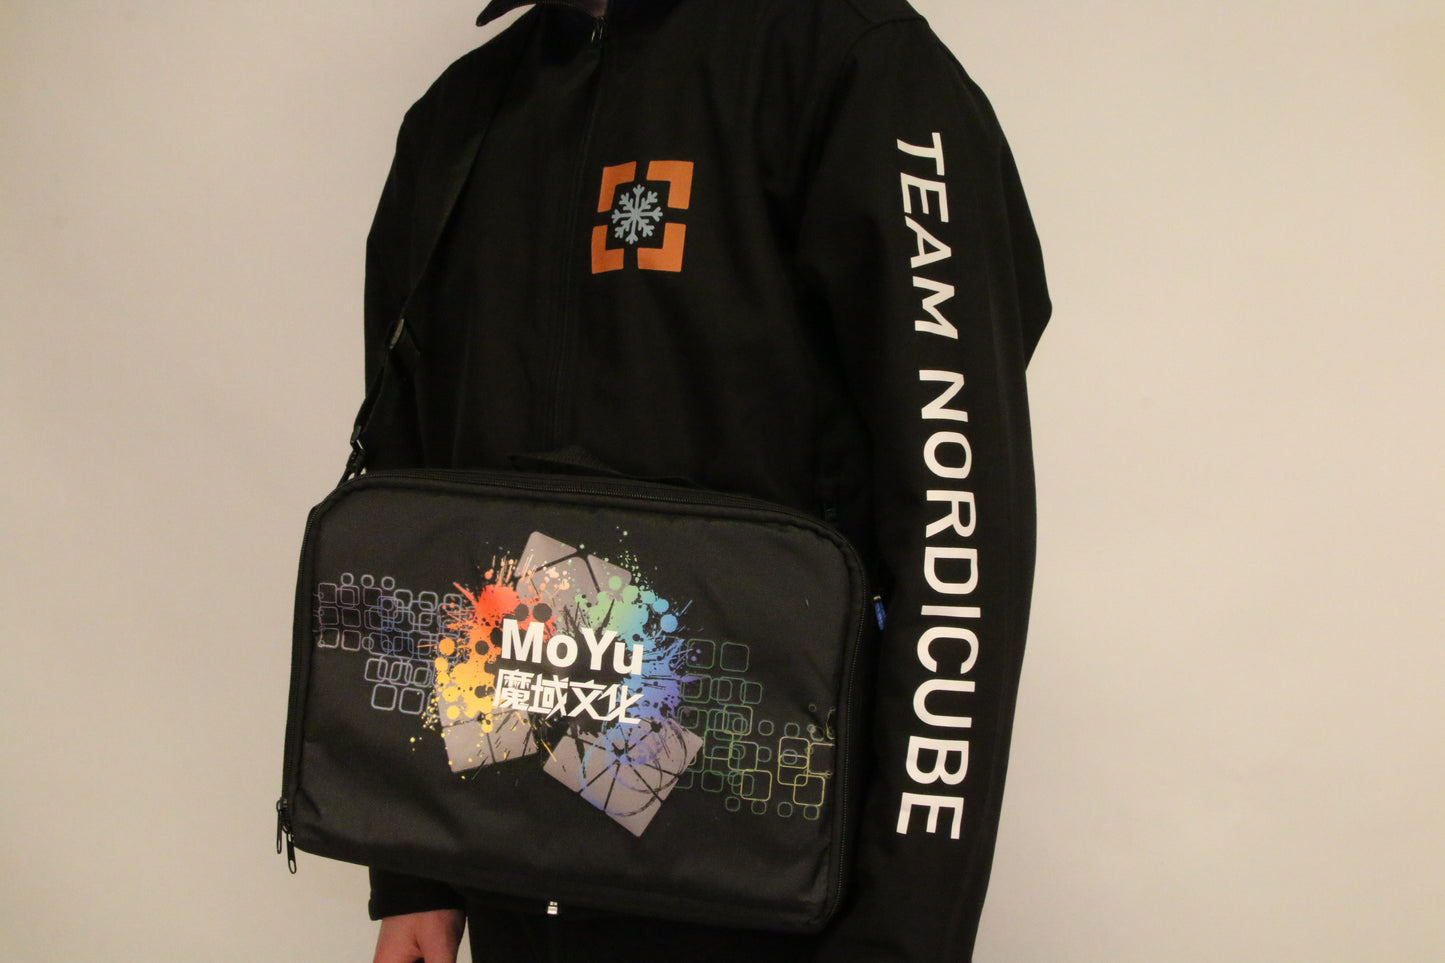 MoYu Cube Bag